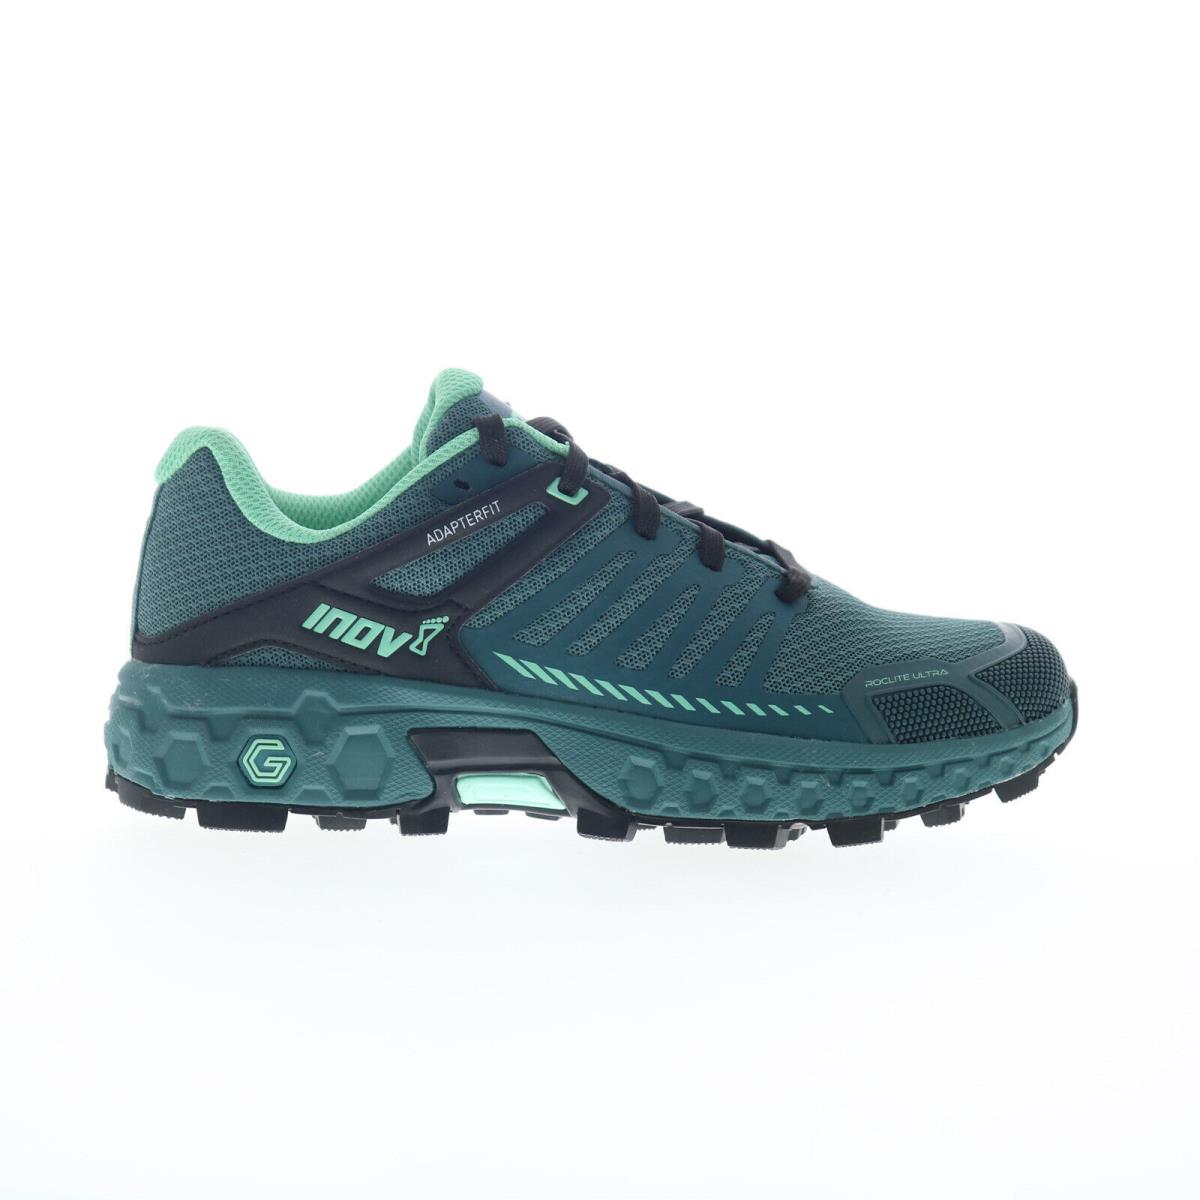 Inov-8 Roclite Ultra G 320 001080-TLMT Womens Green Athletic Hiking Shoes